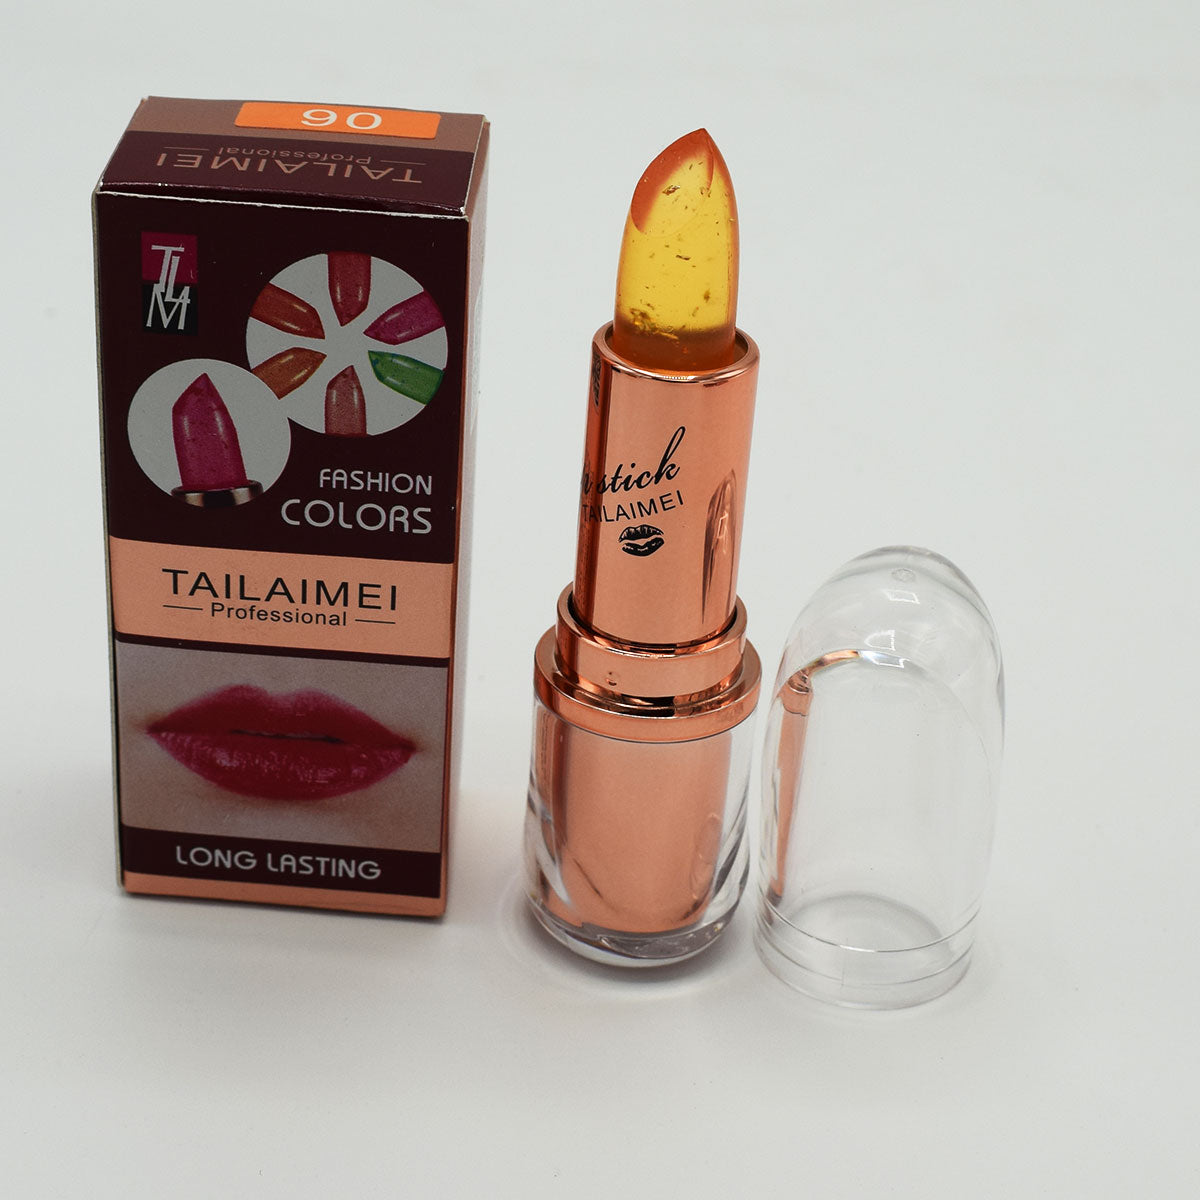 TAILAIMEI – Transparent Color Balm Lipstick